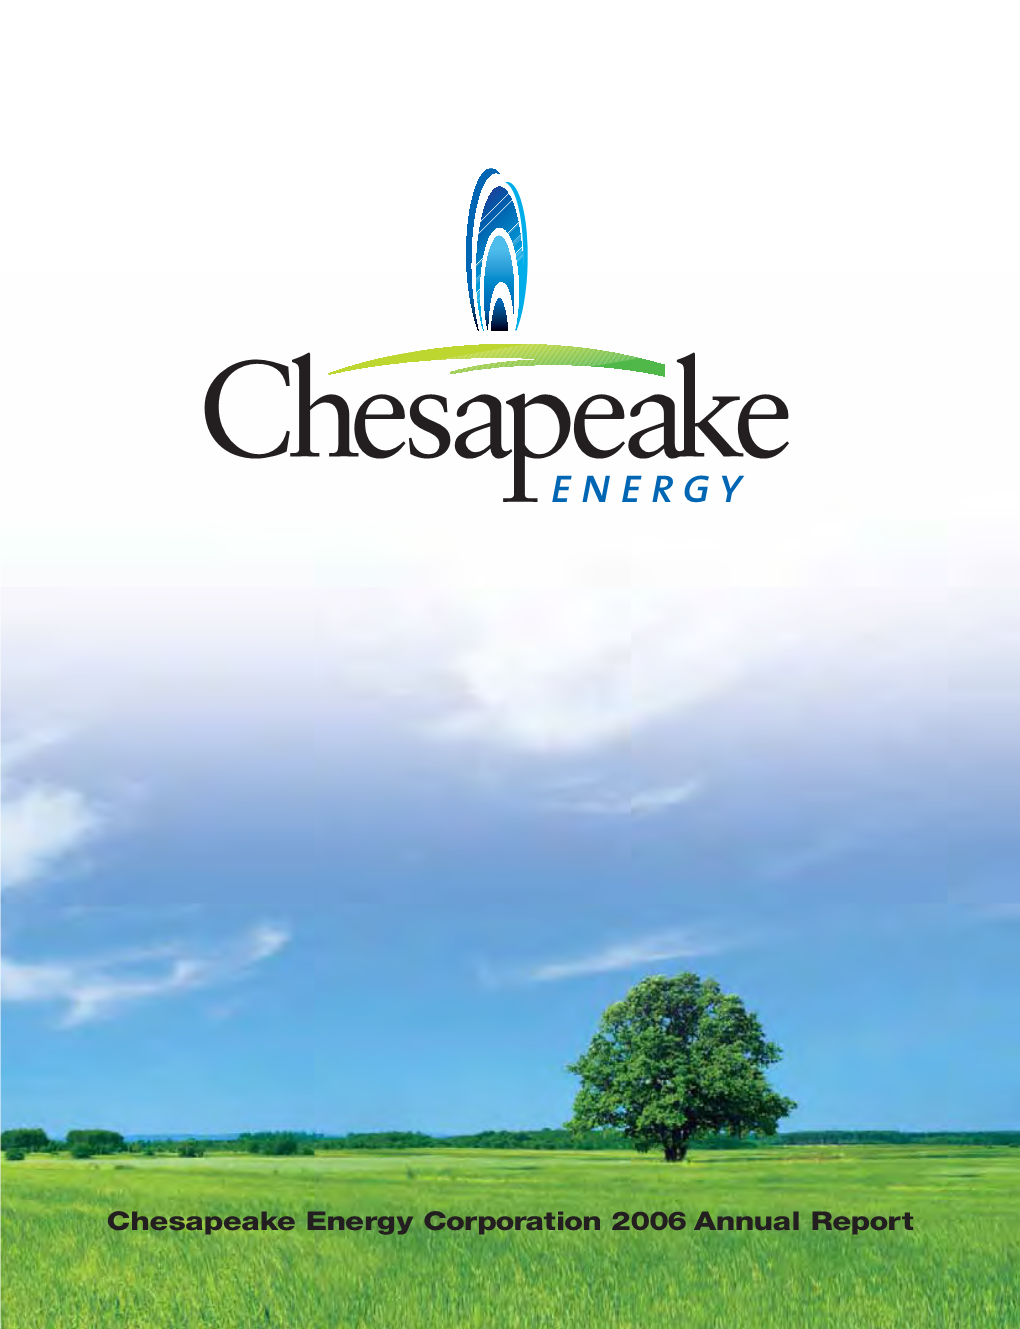 Chesapeake Energy Corporation 2006 Annual Report Chesapeake Energy Corporation 2006 Annual Report at a Glance